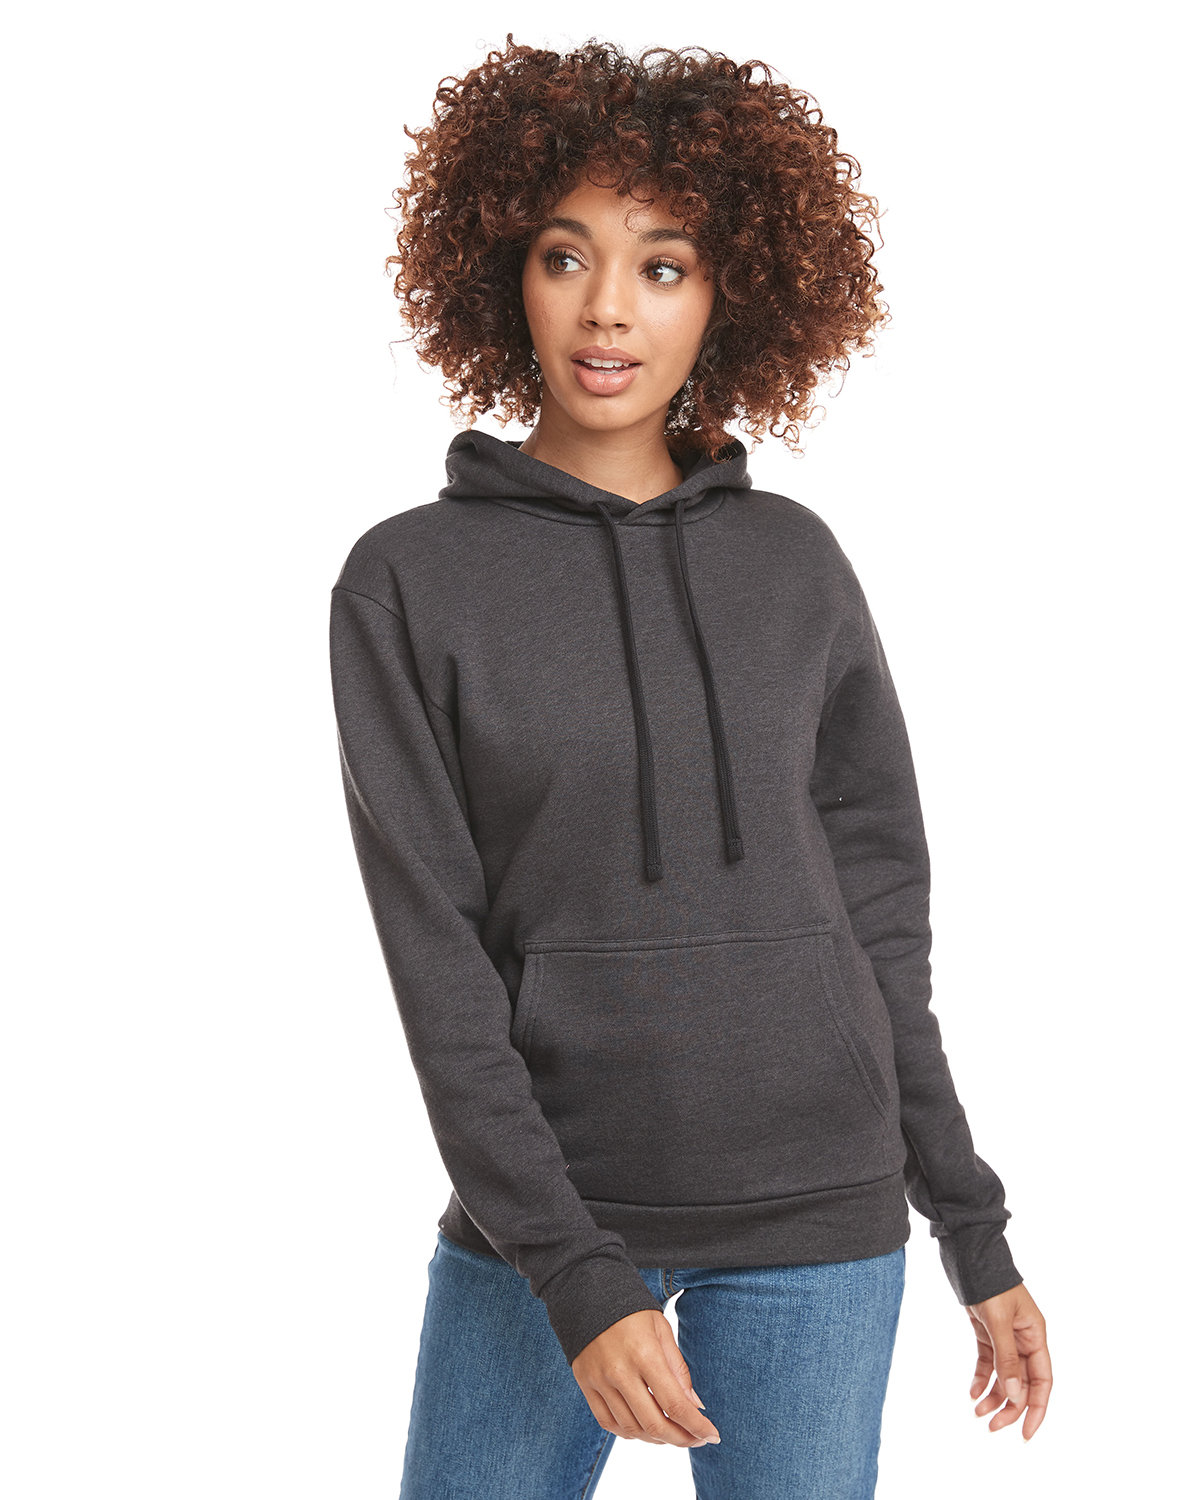 Next Level Unisex Malibu Pullover Hooded Sweatshirt HEATHER BLACK 